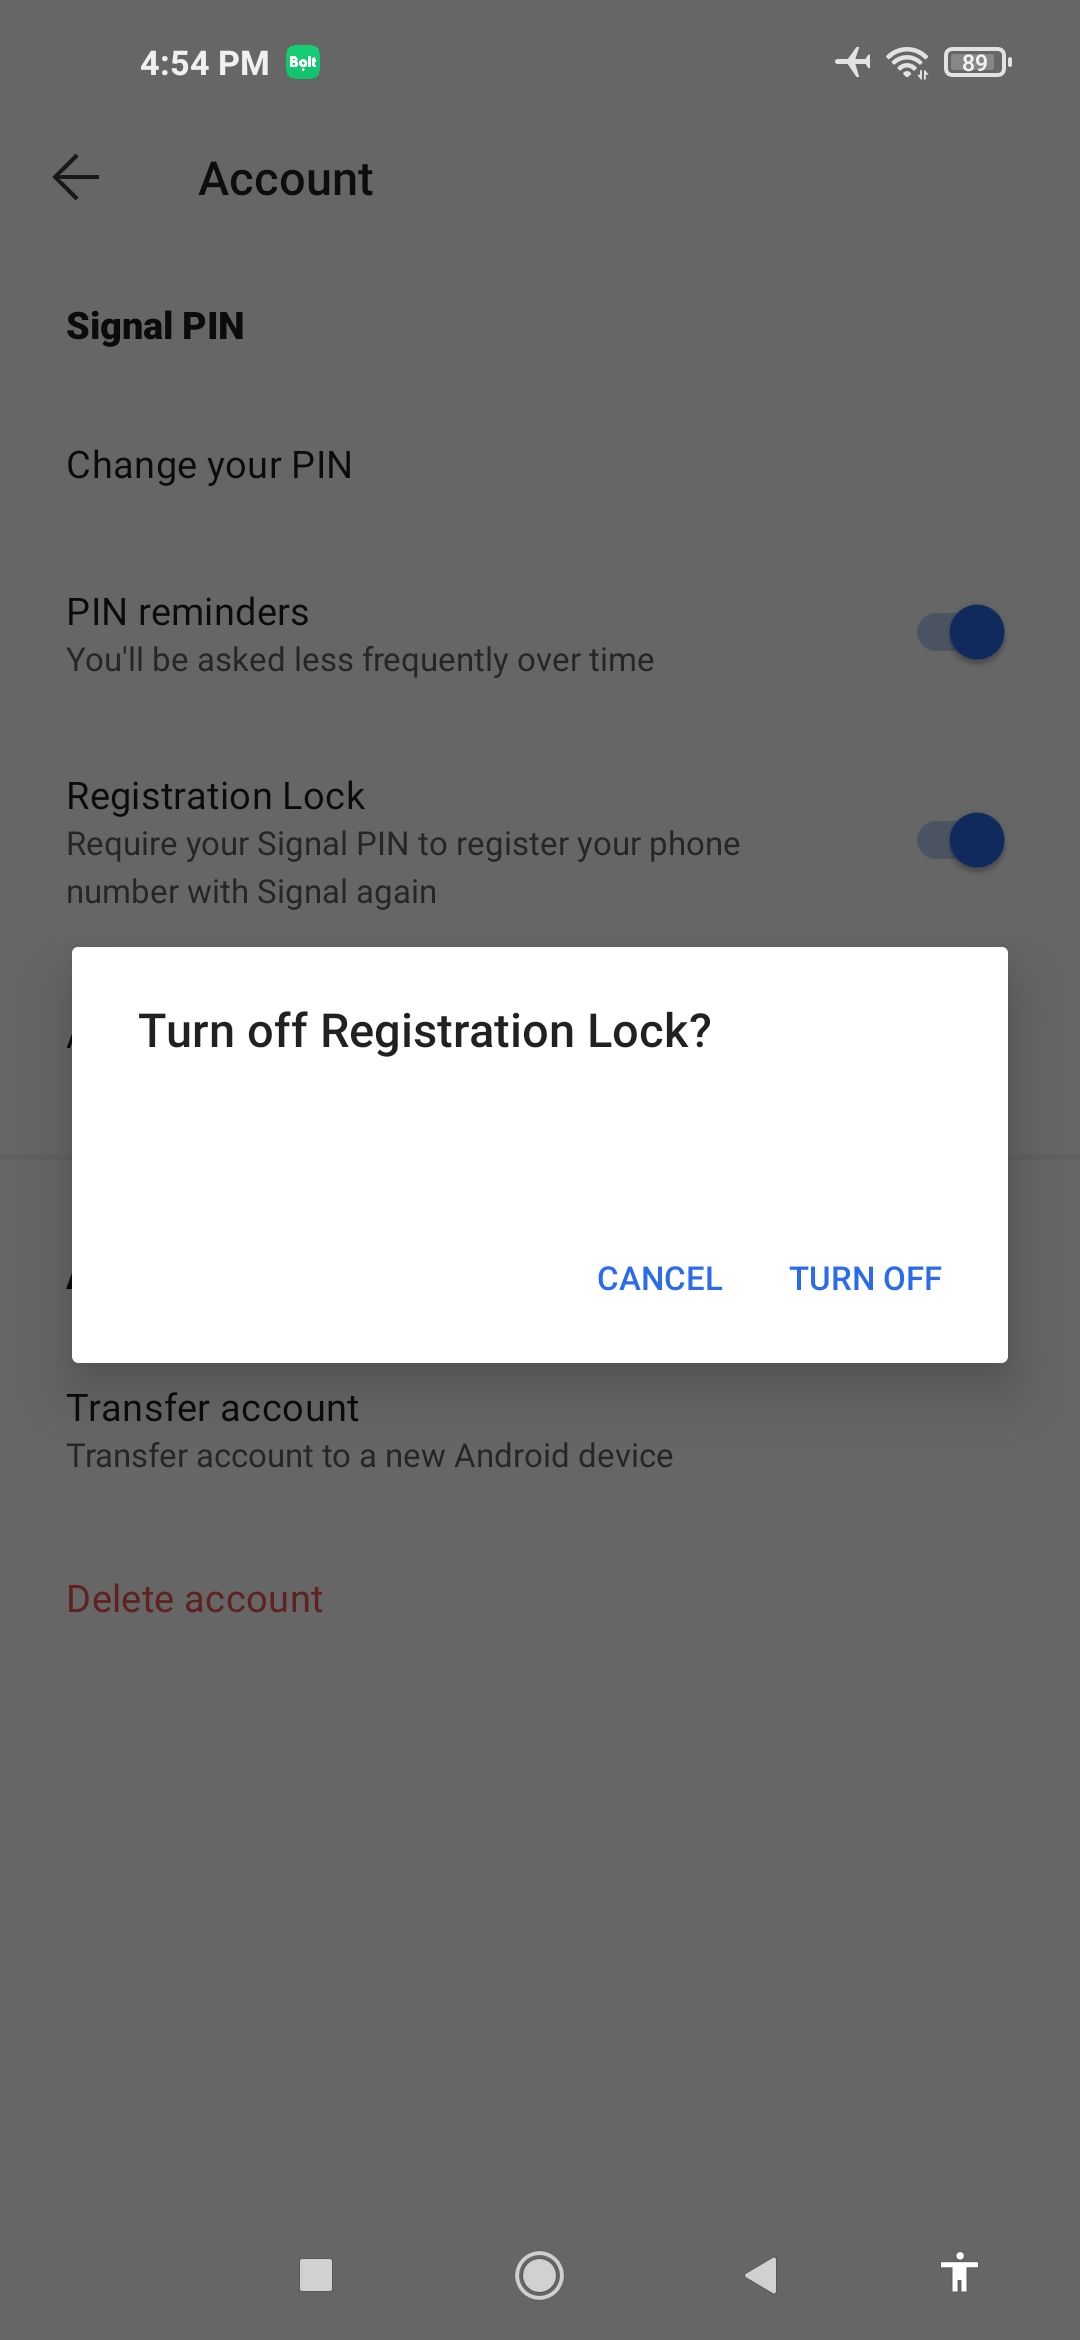 Signal turn off Registration Lock warning